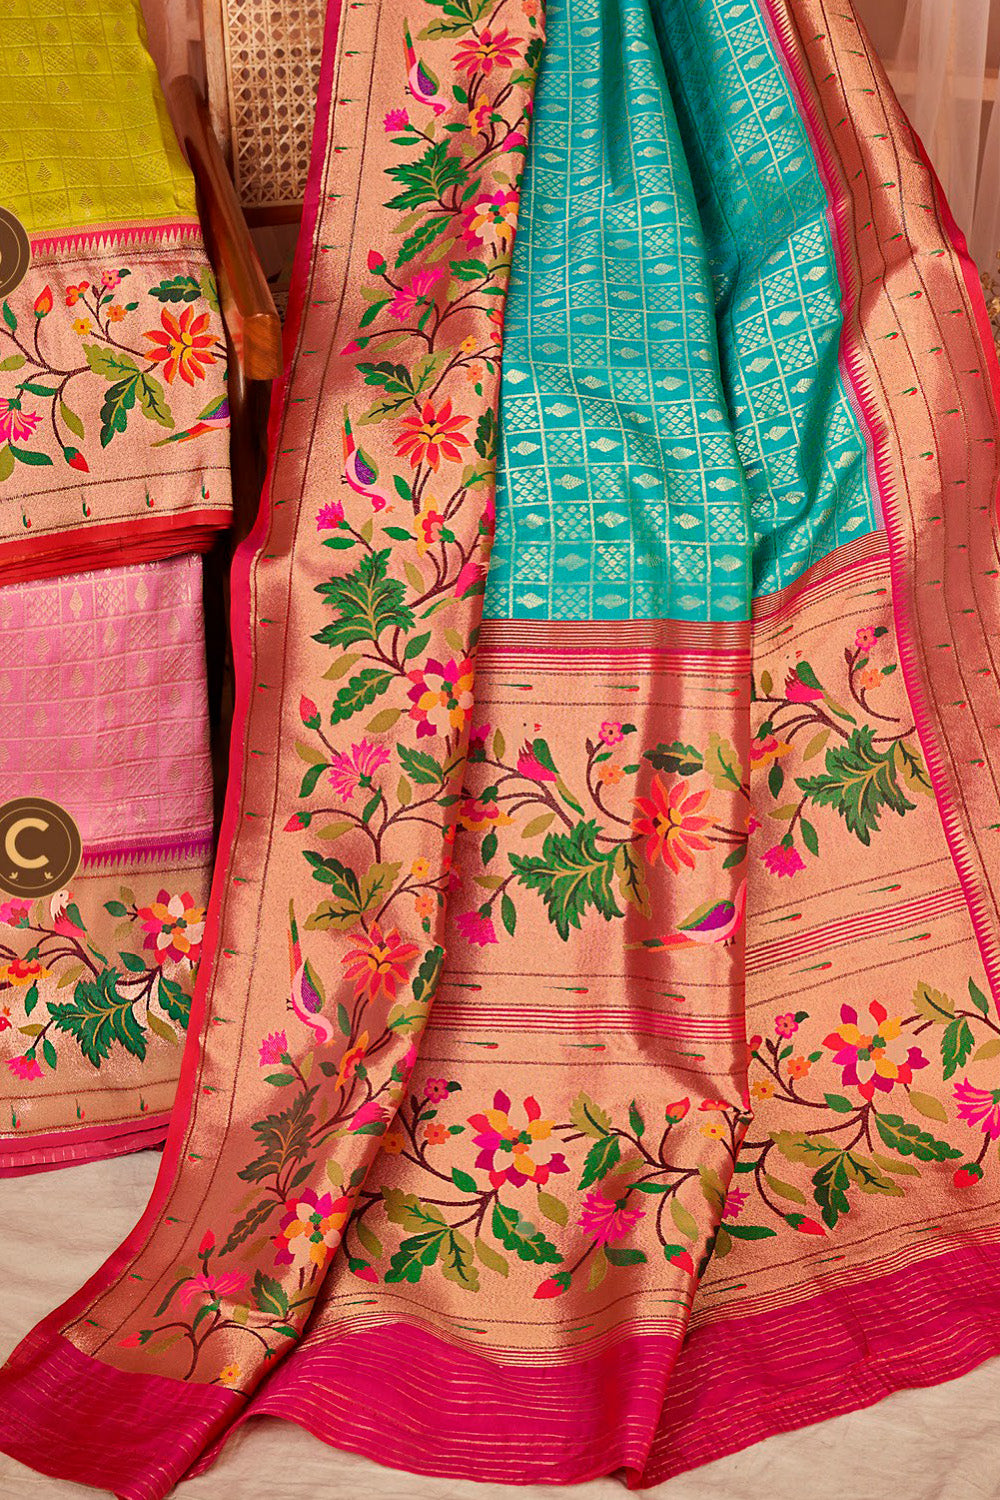 Turquoise Color Paithani Woven Silk Saree